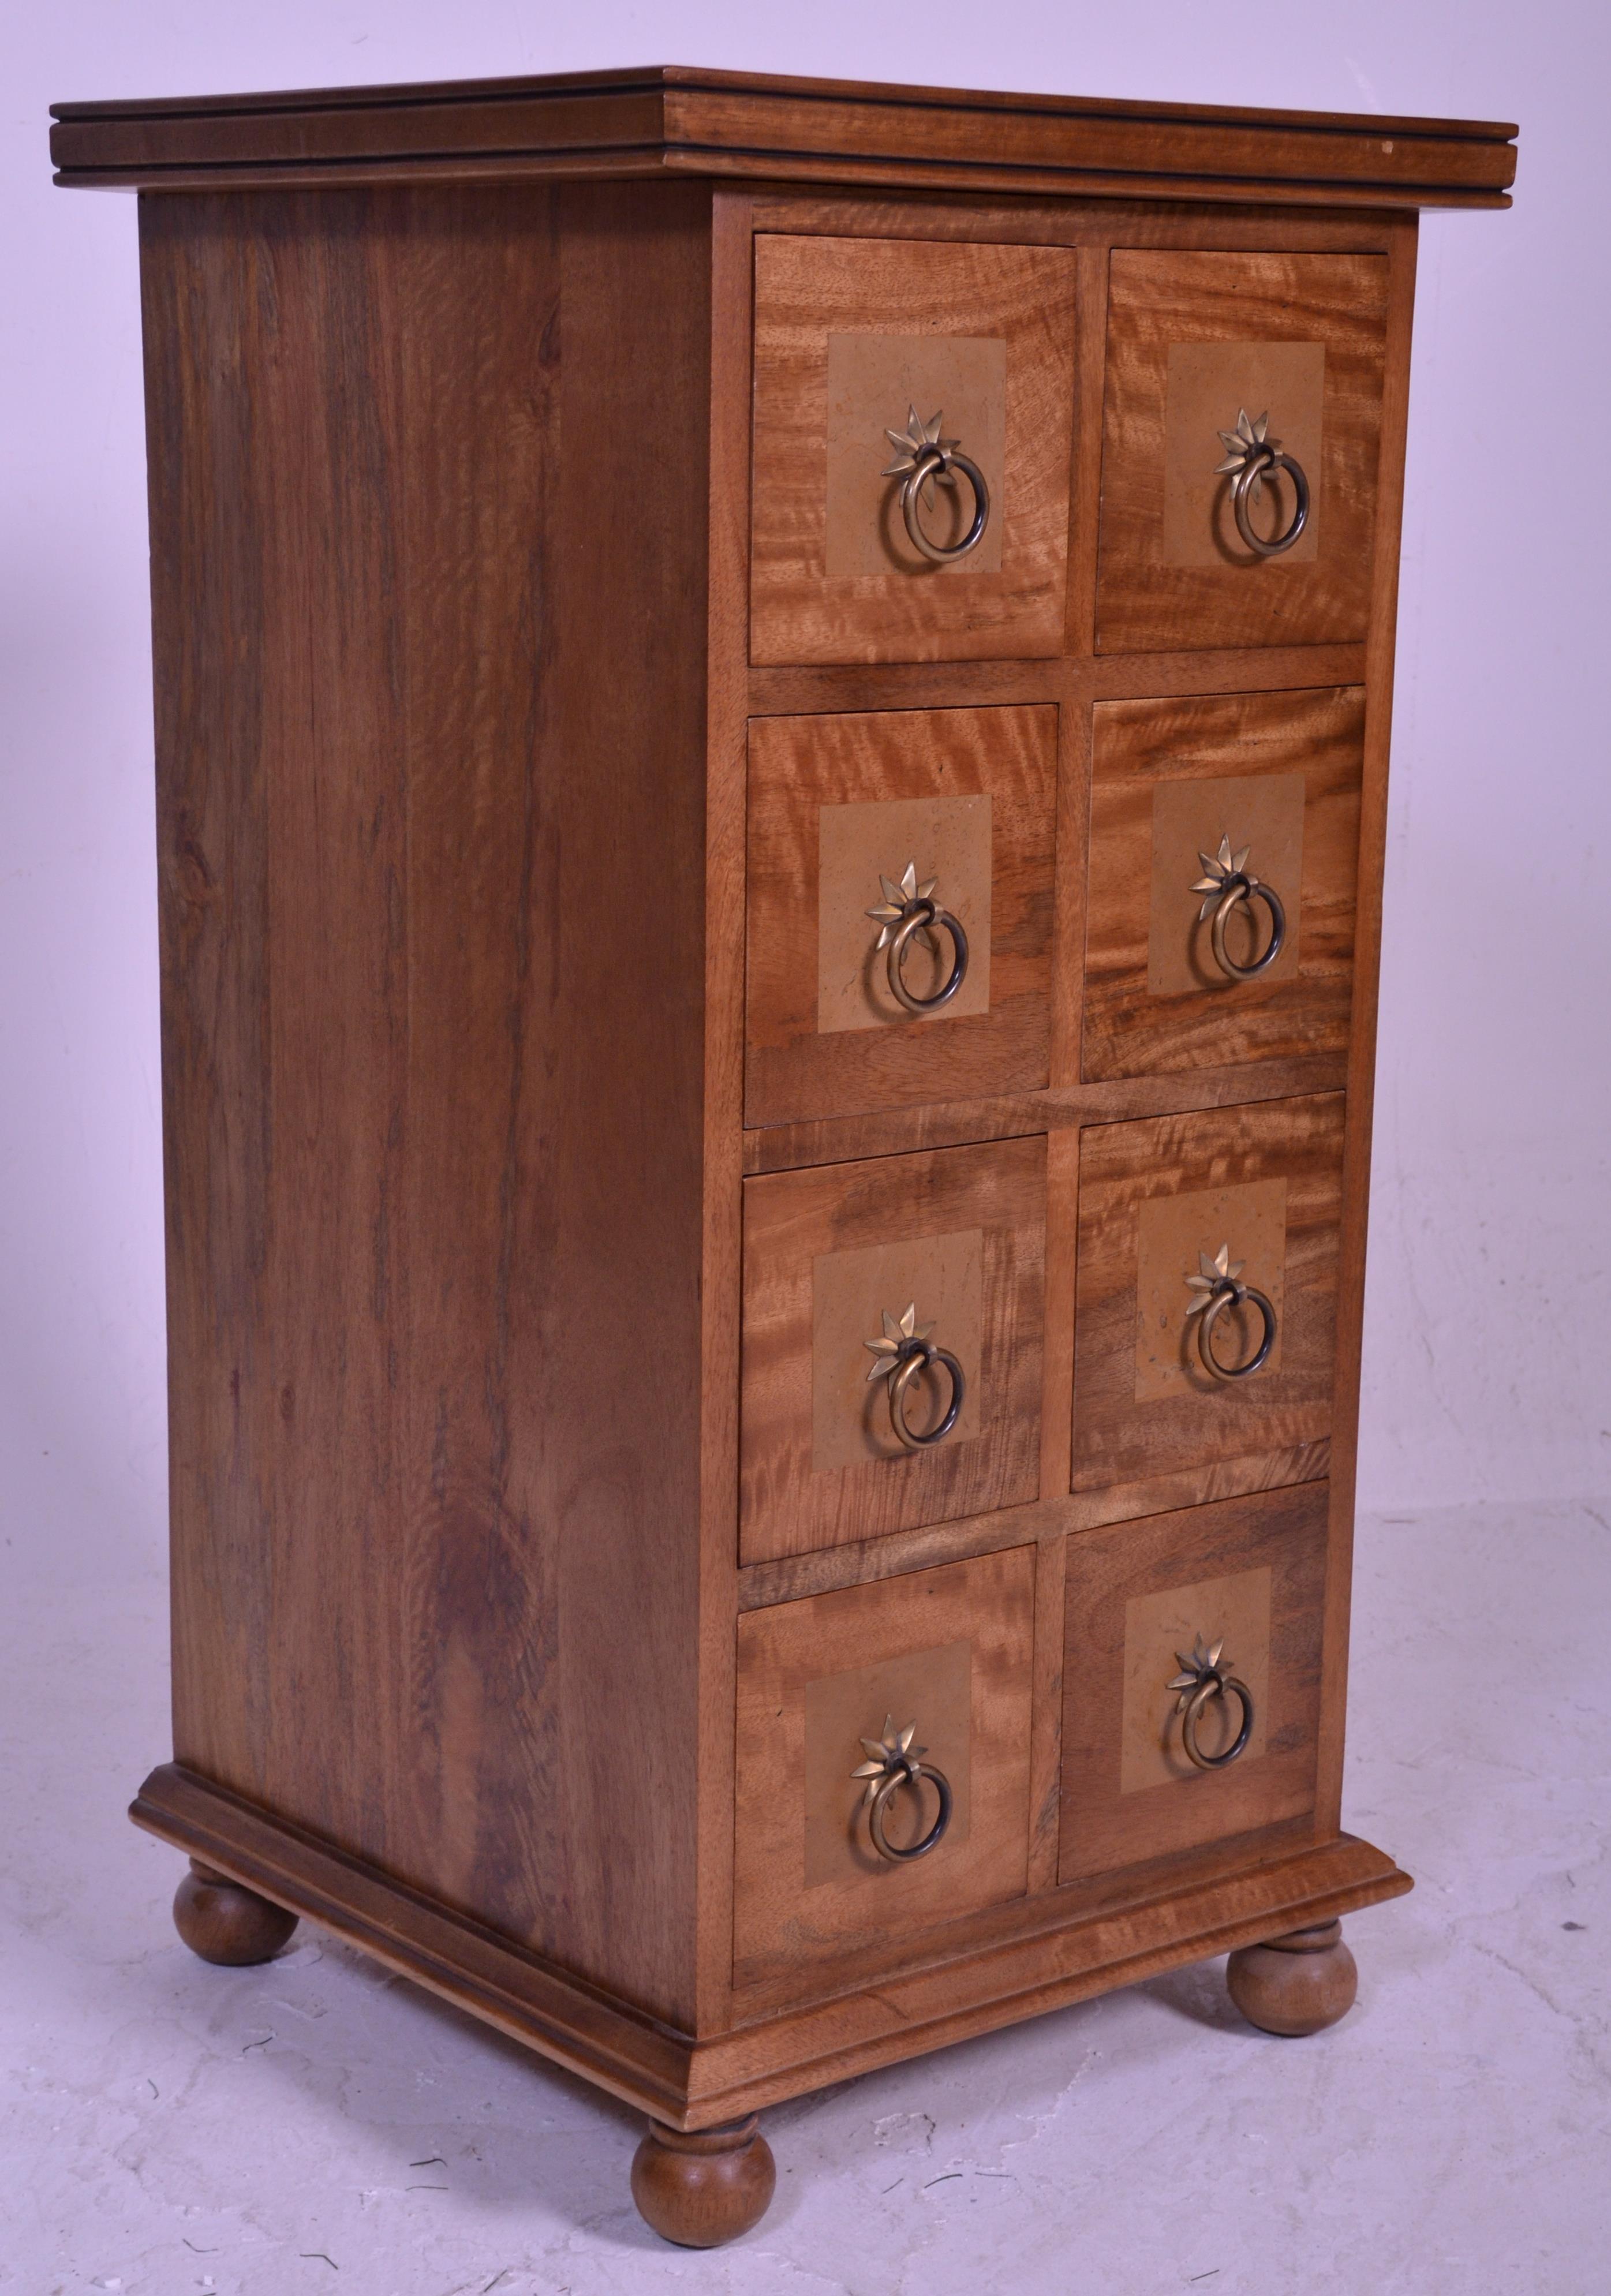 A contemporary 20th century hardwood inlaid pedestal merchants chest of drawers. Raised on bun